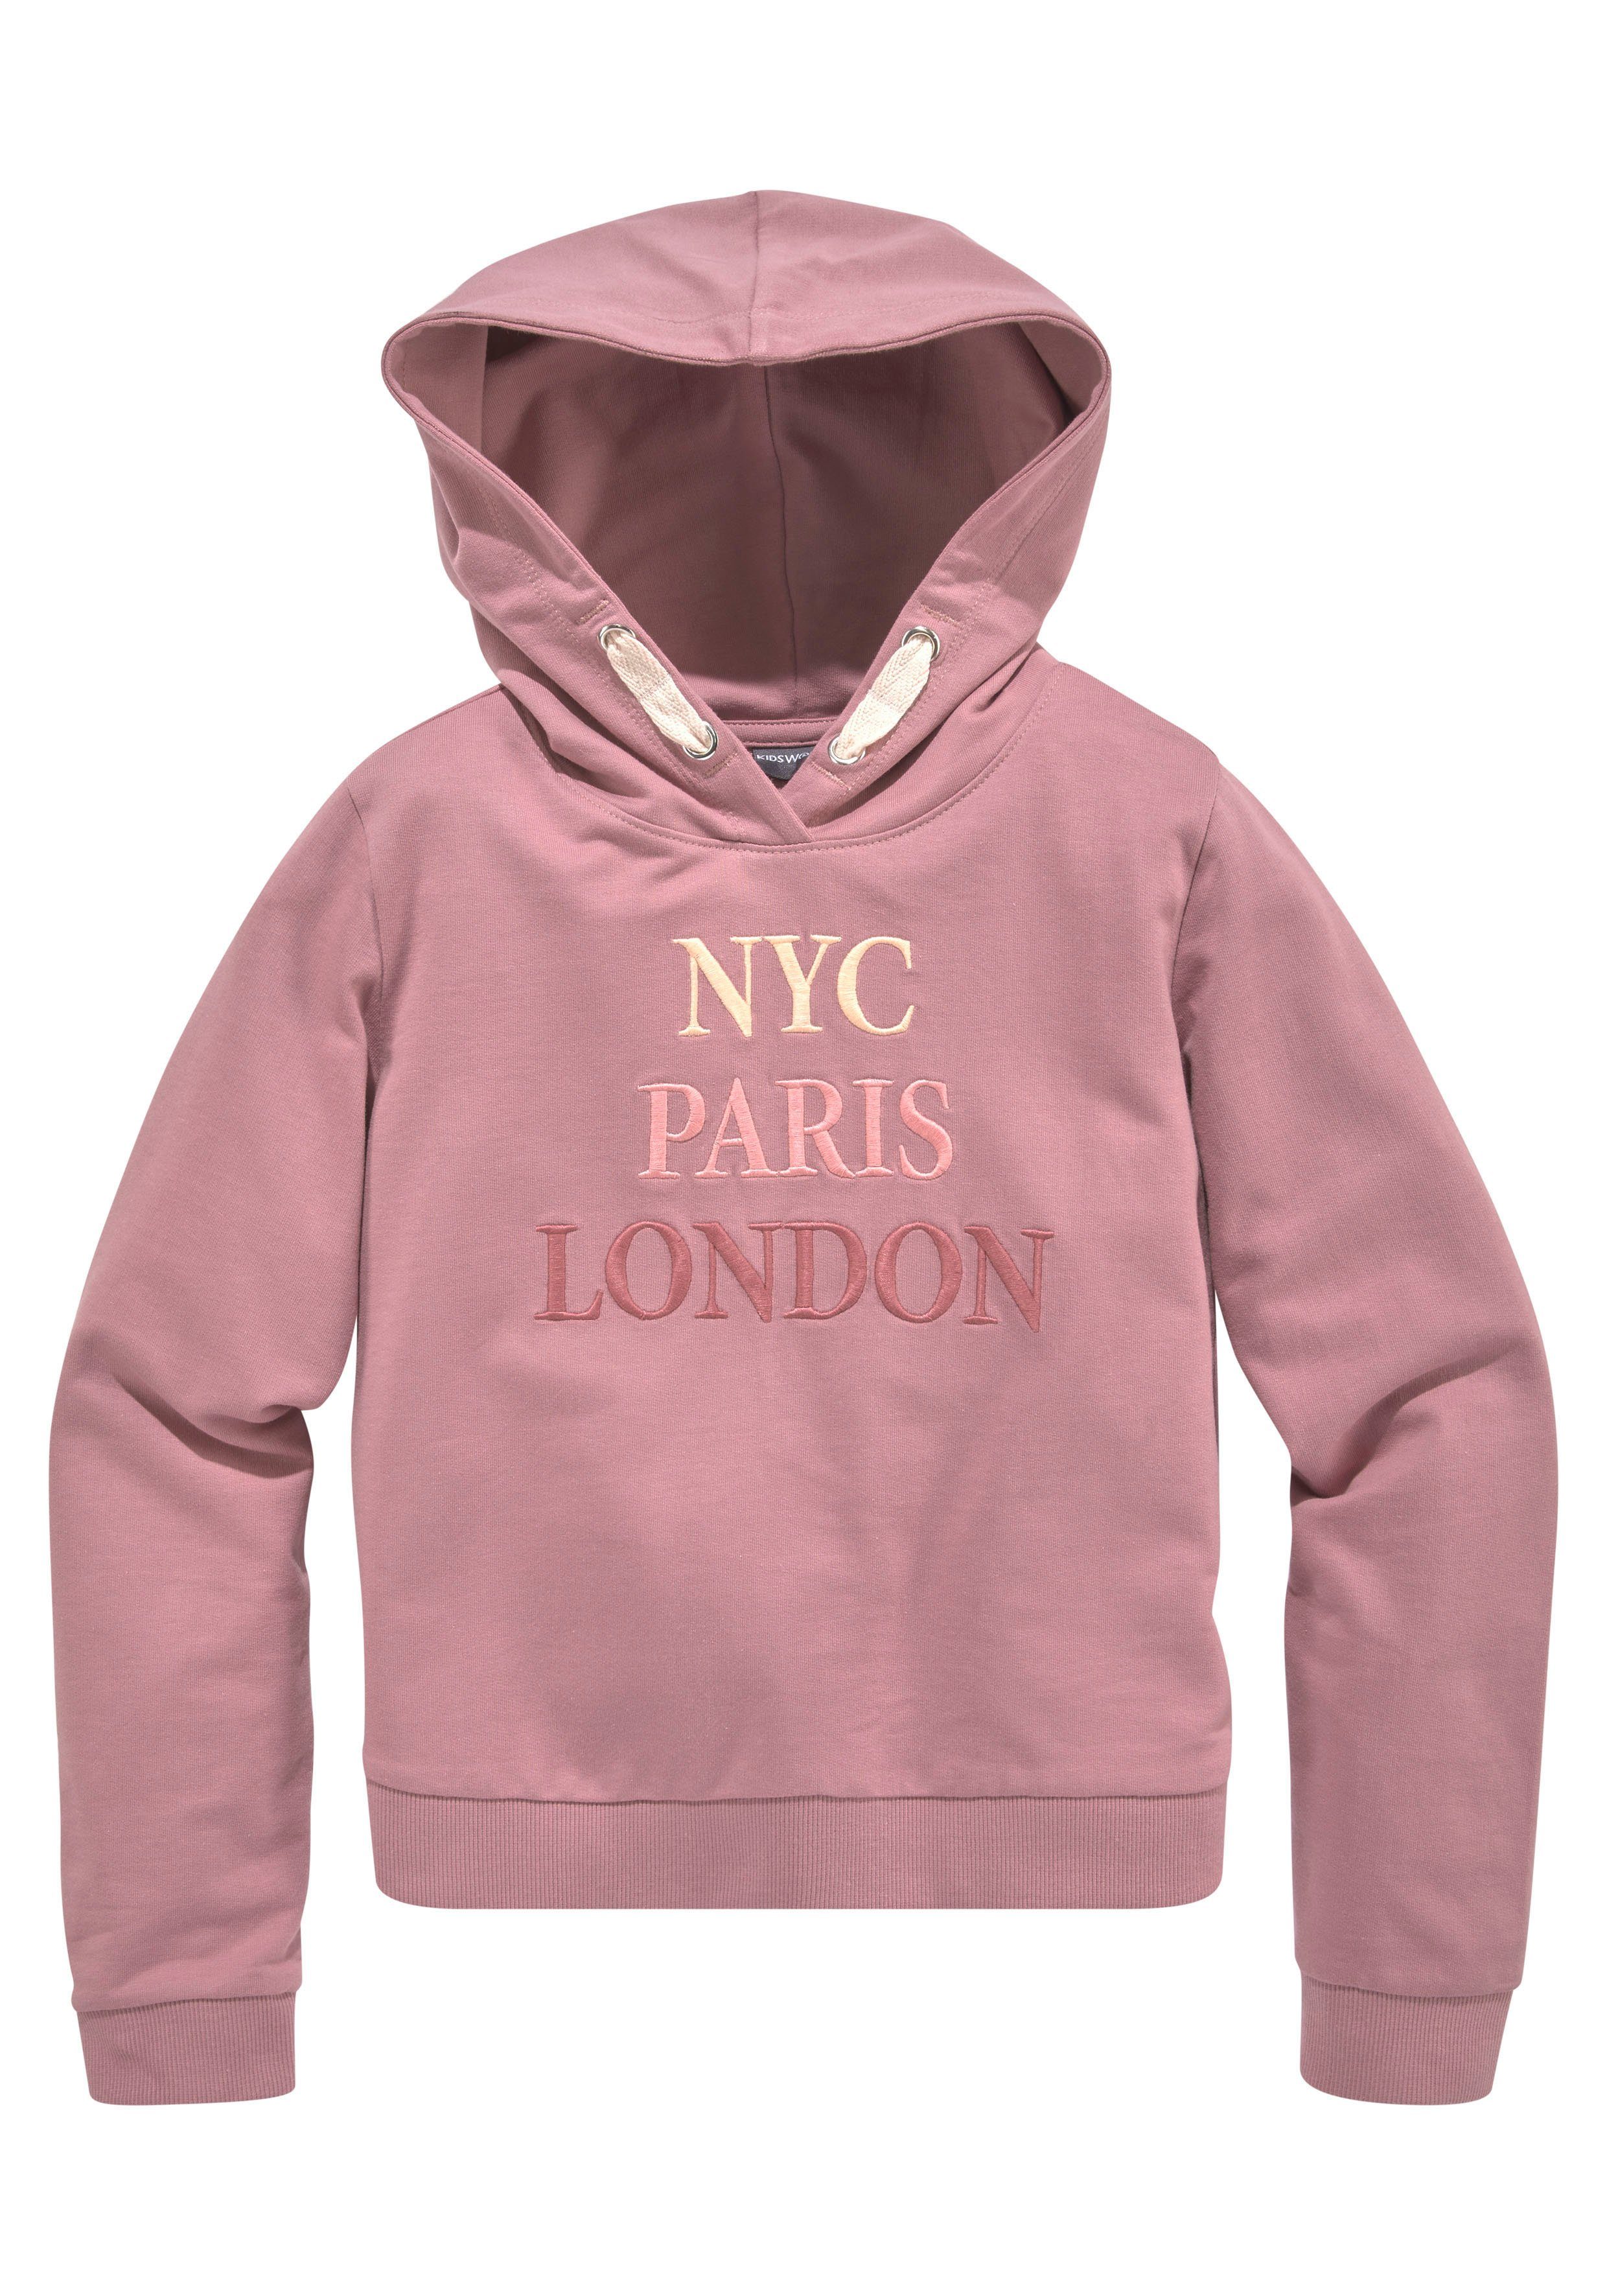 KIDSWORLD Kapuzensweatshirt London Paris mit NYC Stickerei